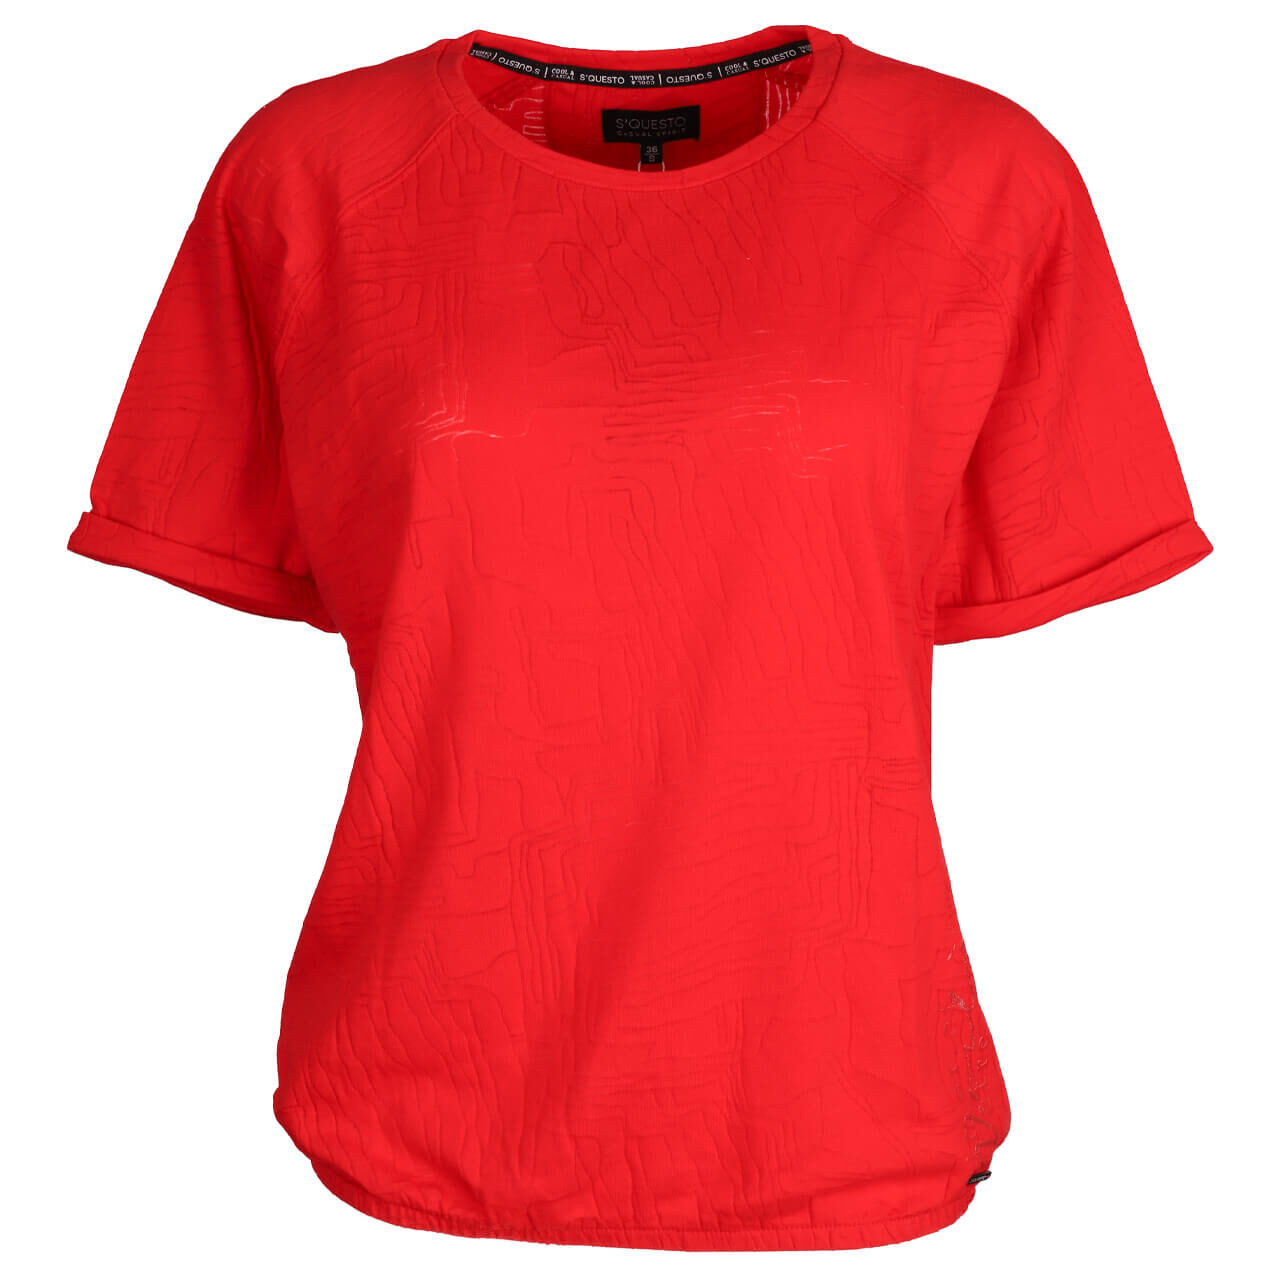 Soquesto Damen T-Shirt burnout tomato red